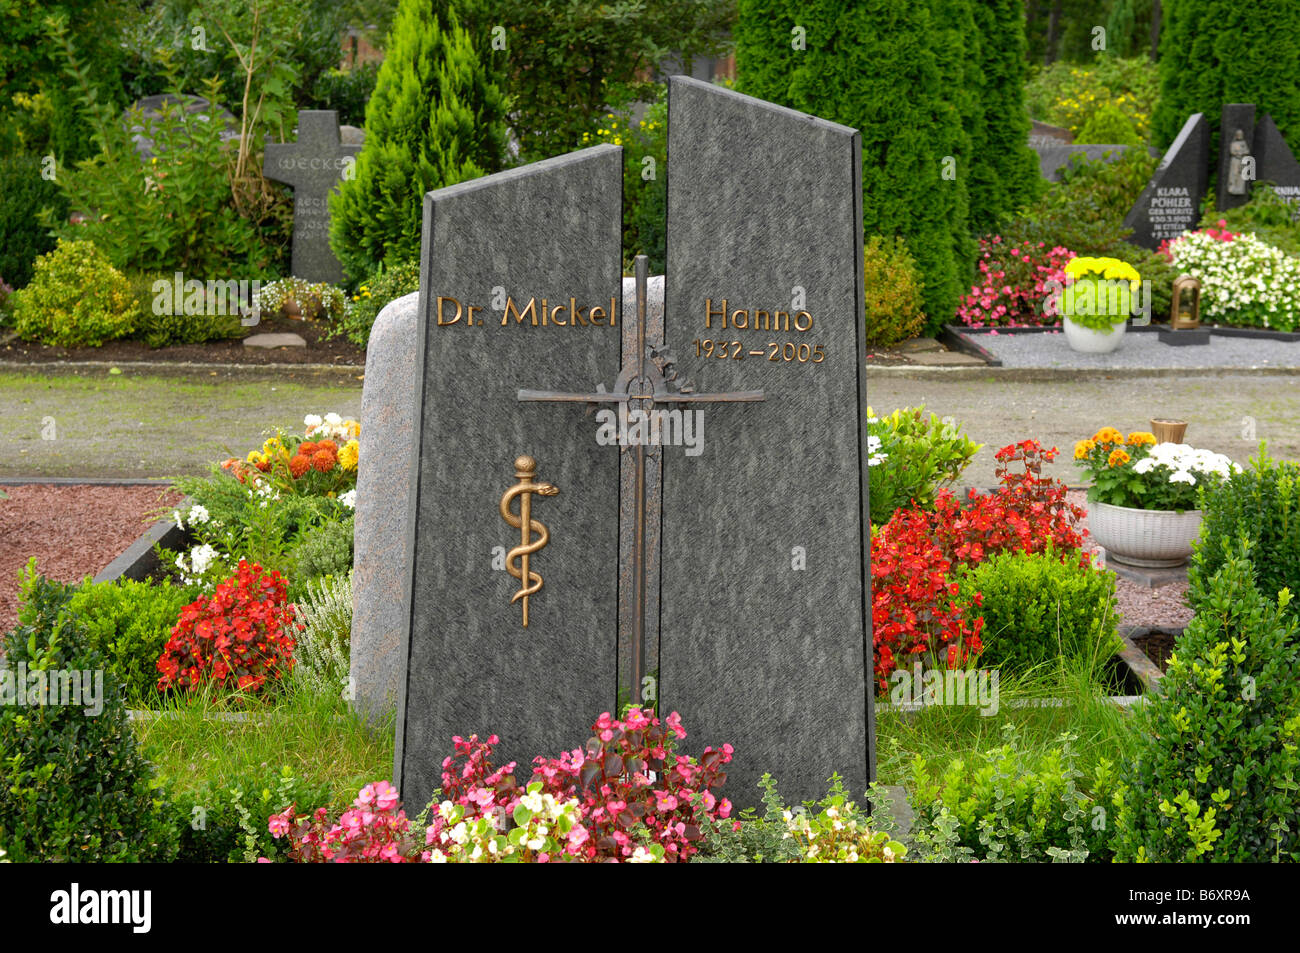 friedhof sennelager cemetery graveyard headstone death mortality tribute burial memorial germany deutschland Stock Photo